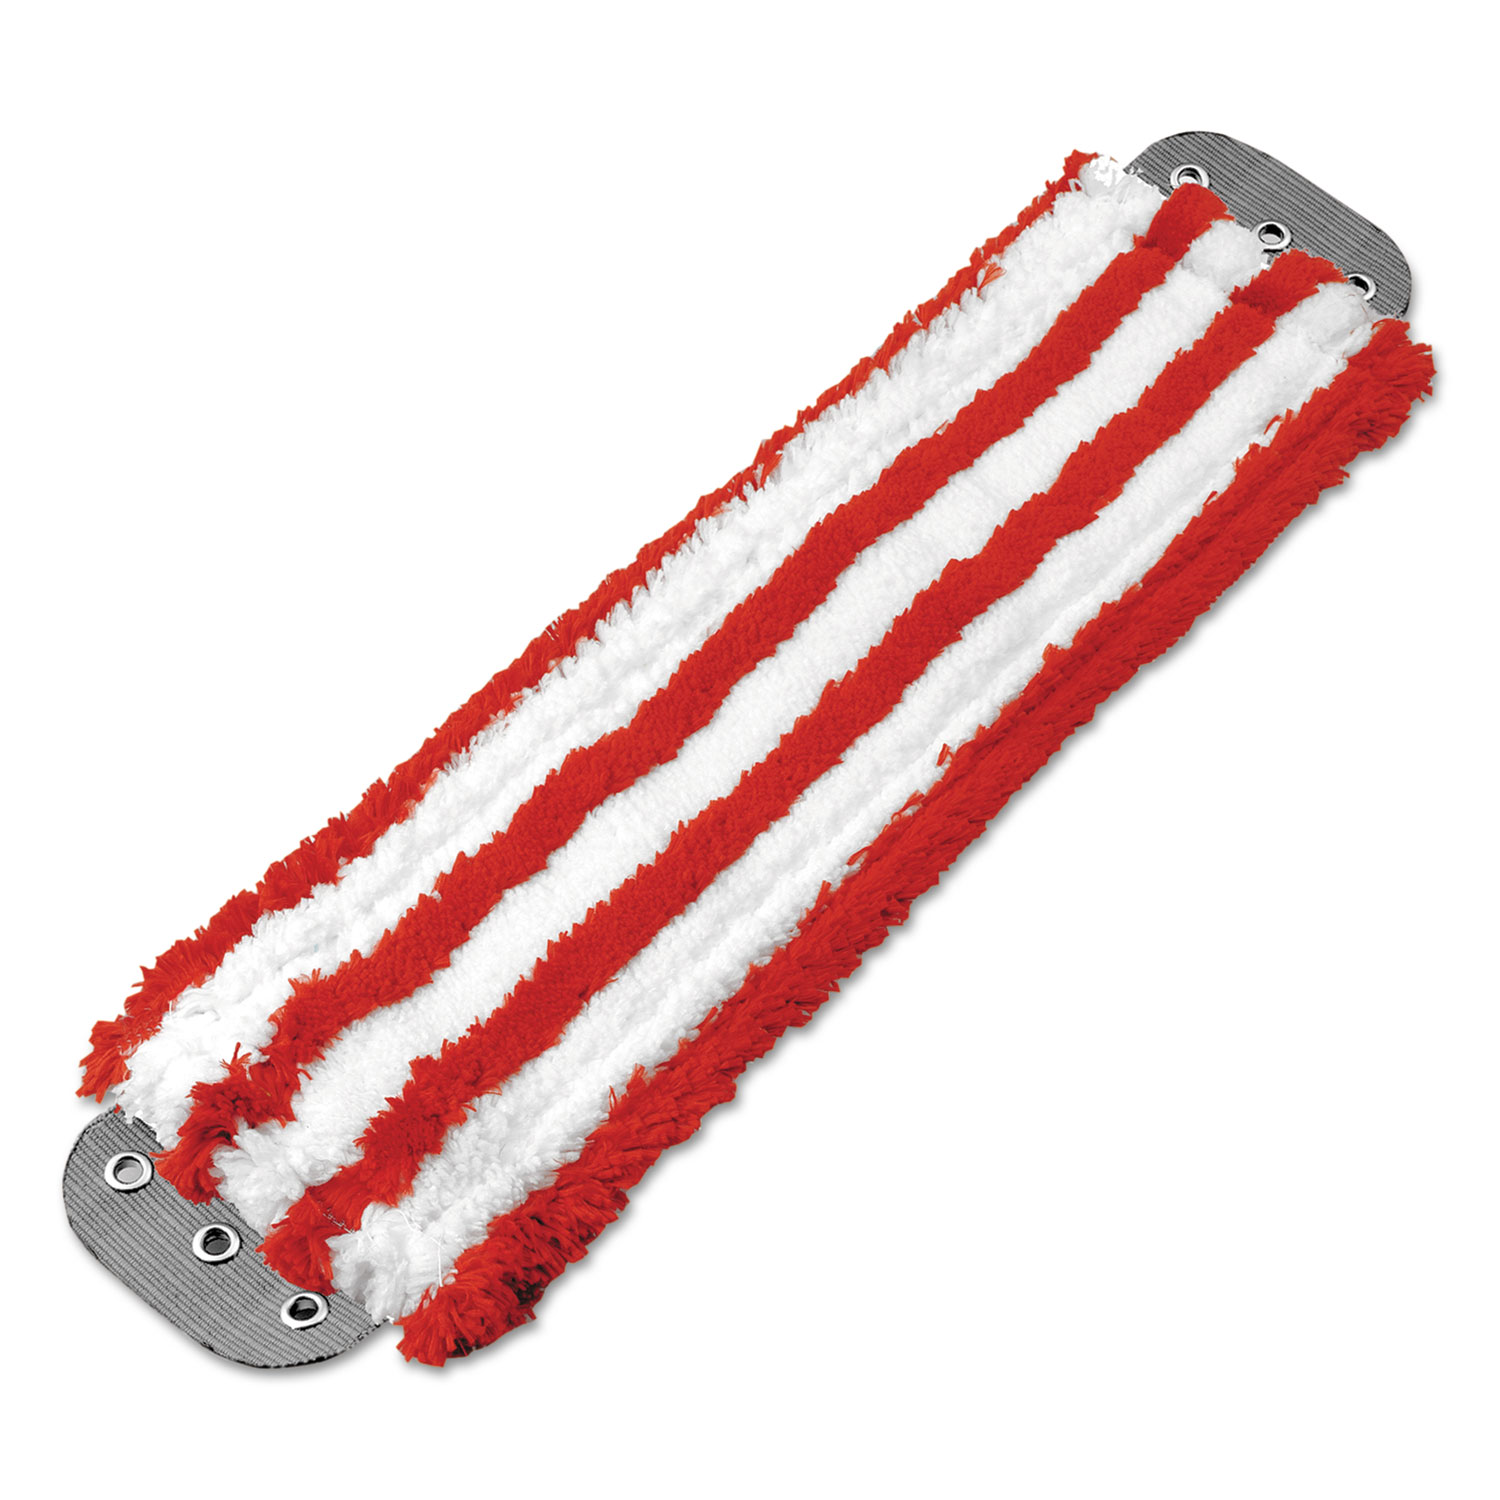  Unger MD40R Microfiber Mop Head, 16 x 5, Medium-Duty 7mm Pile, Red/White (UNGMD40R) 